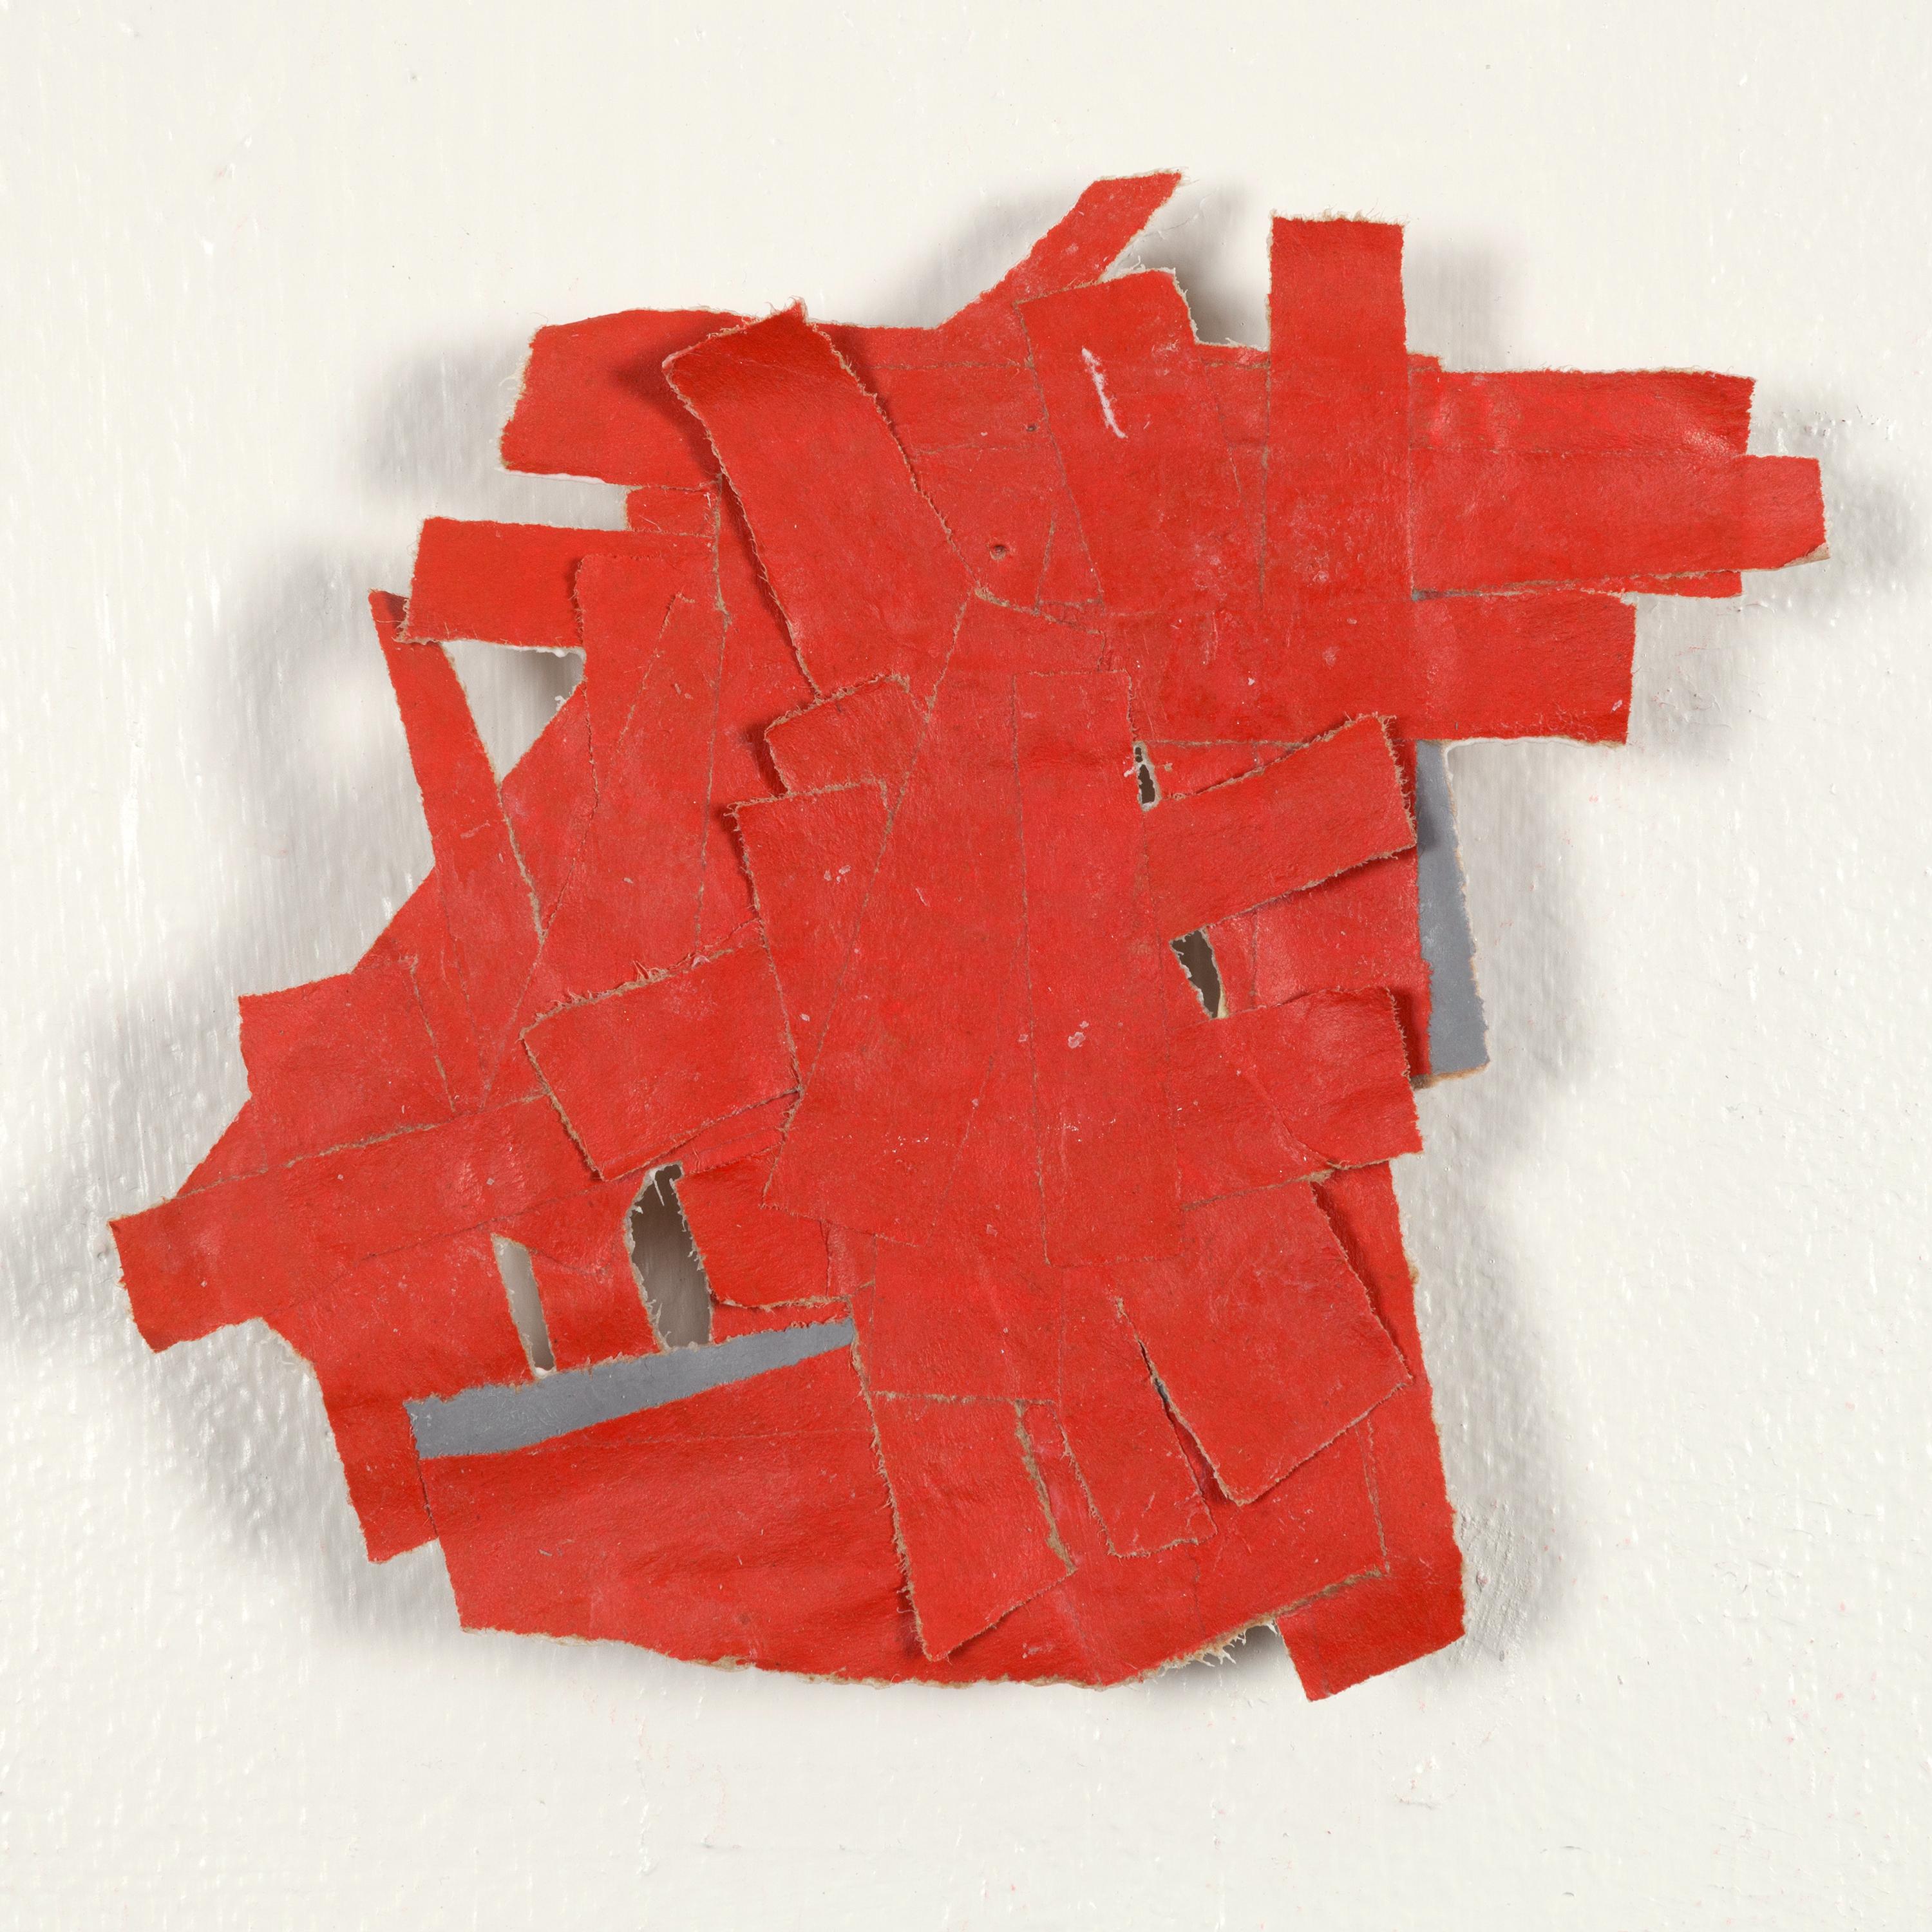 "Lagniappe" - Non-Objective Red Paper Collage - Diebenkorn - Mixed Media Art by Aimée Farnet Siegel